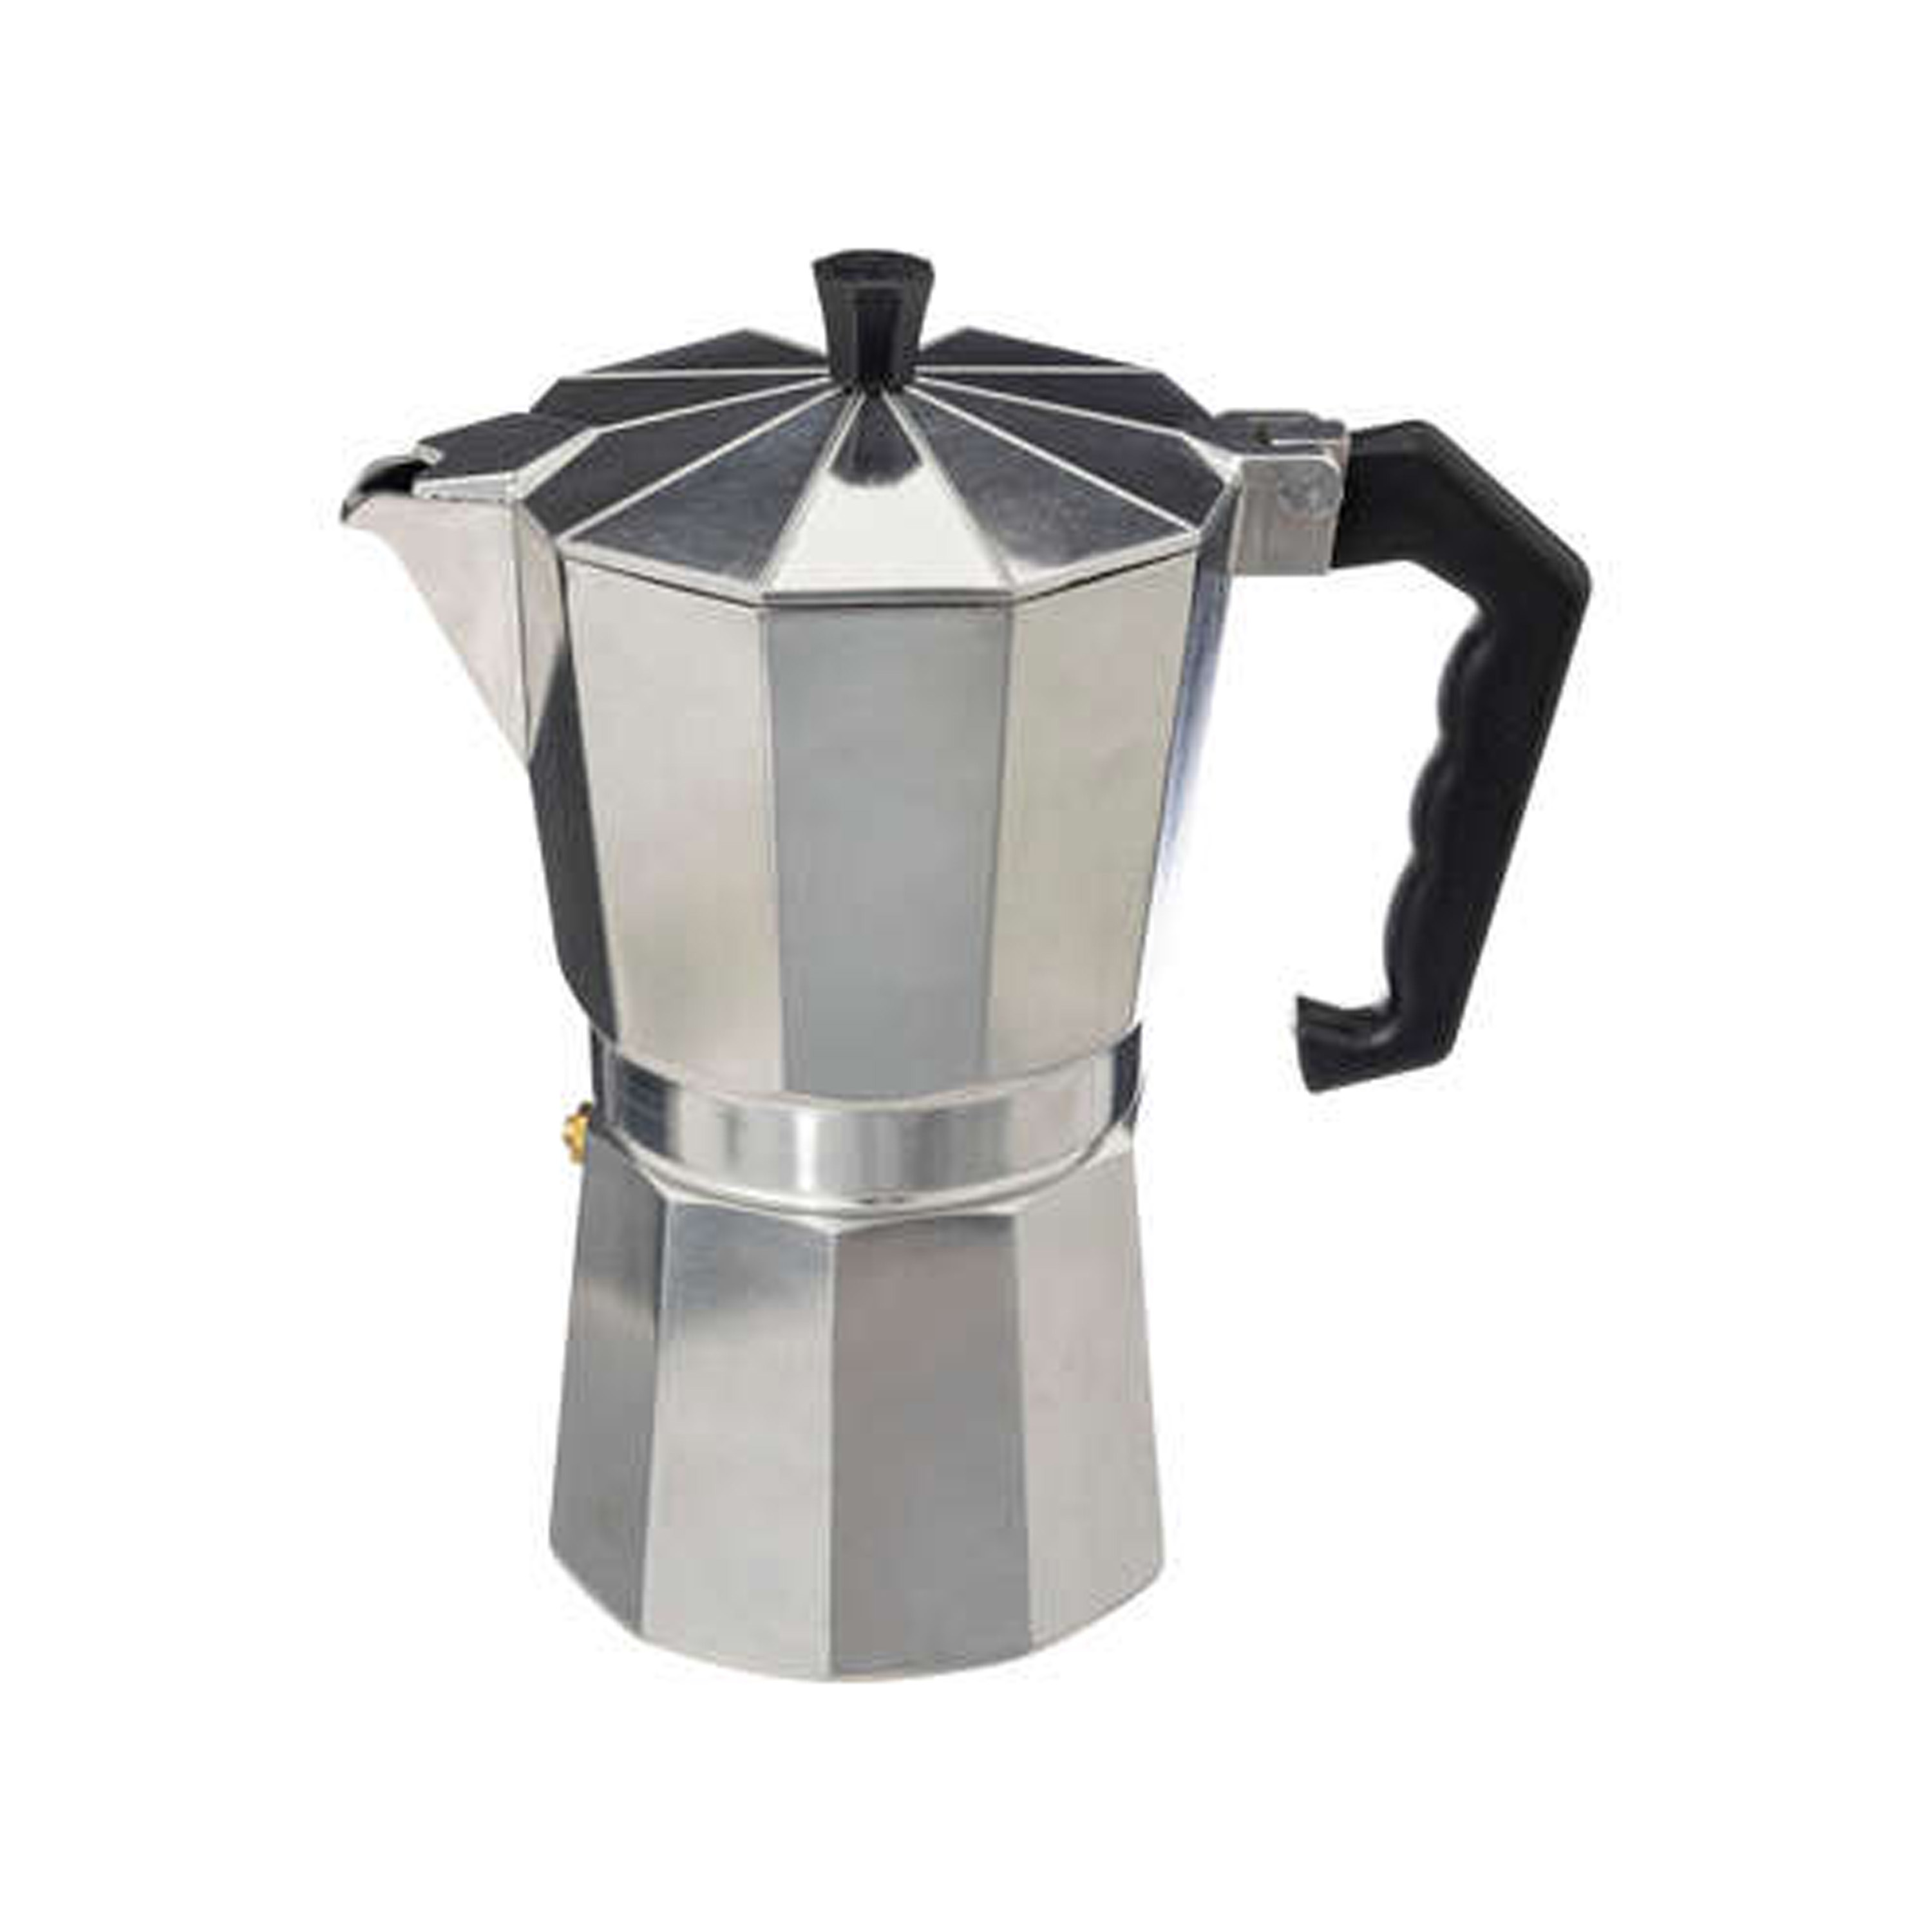 5Five Percolator Italiaans koffiezetapparaat - Aluminium - zilver - 450 ml - Koffiezetter